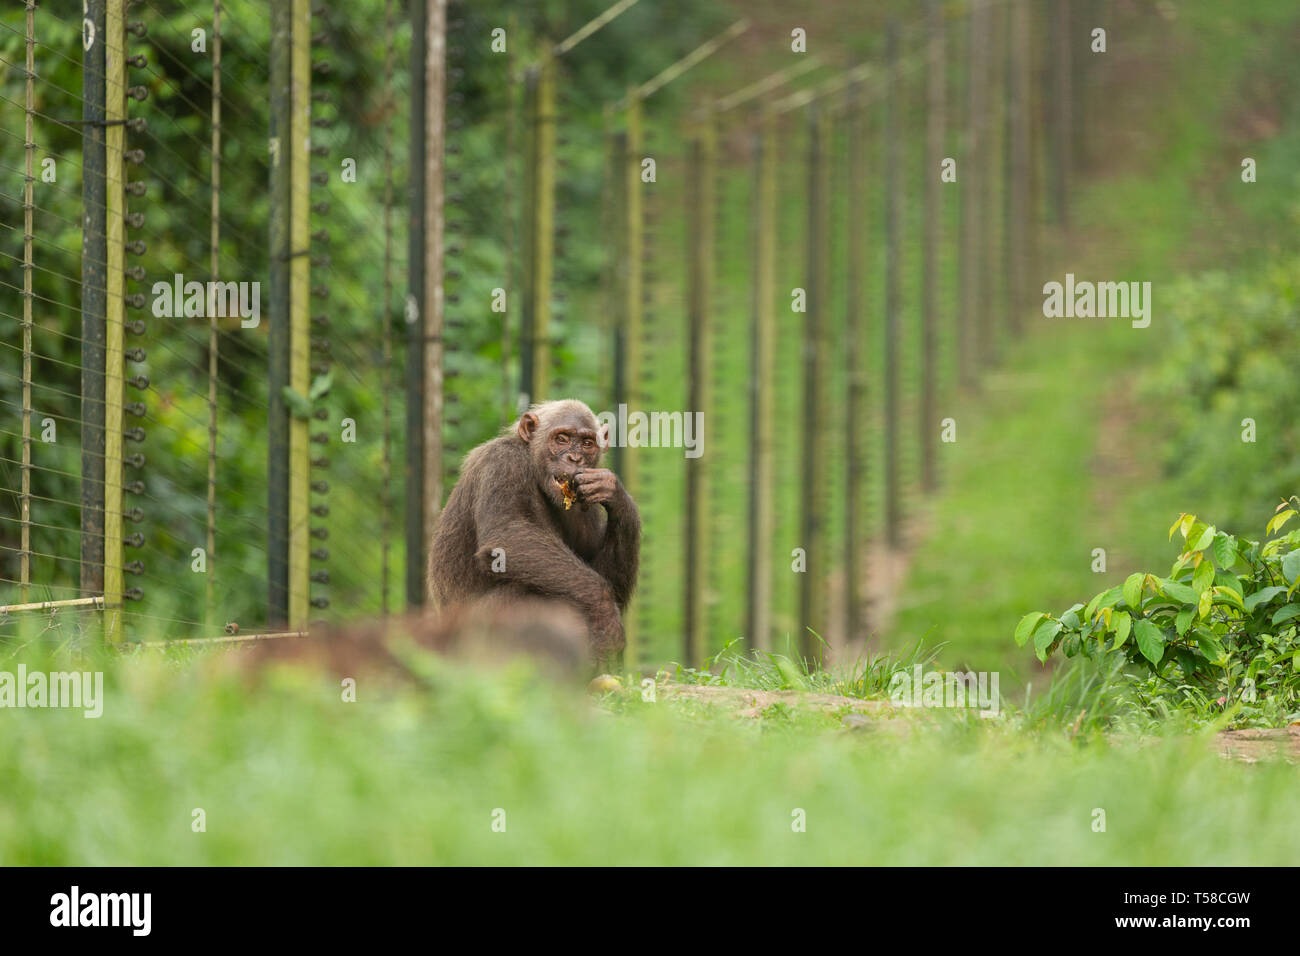 Captive Nigeria-Cameroon chimpanzee at the Drill Ranch, Cross River state, Nigeria Stock Photo